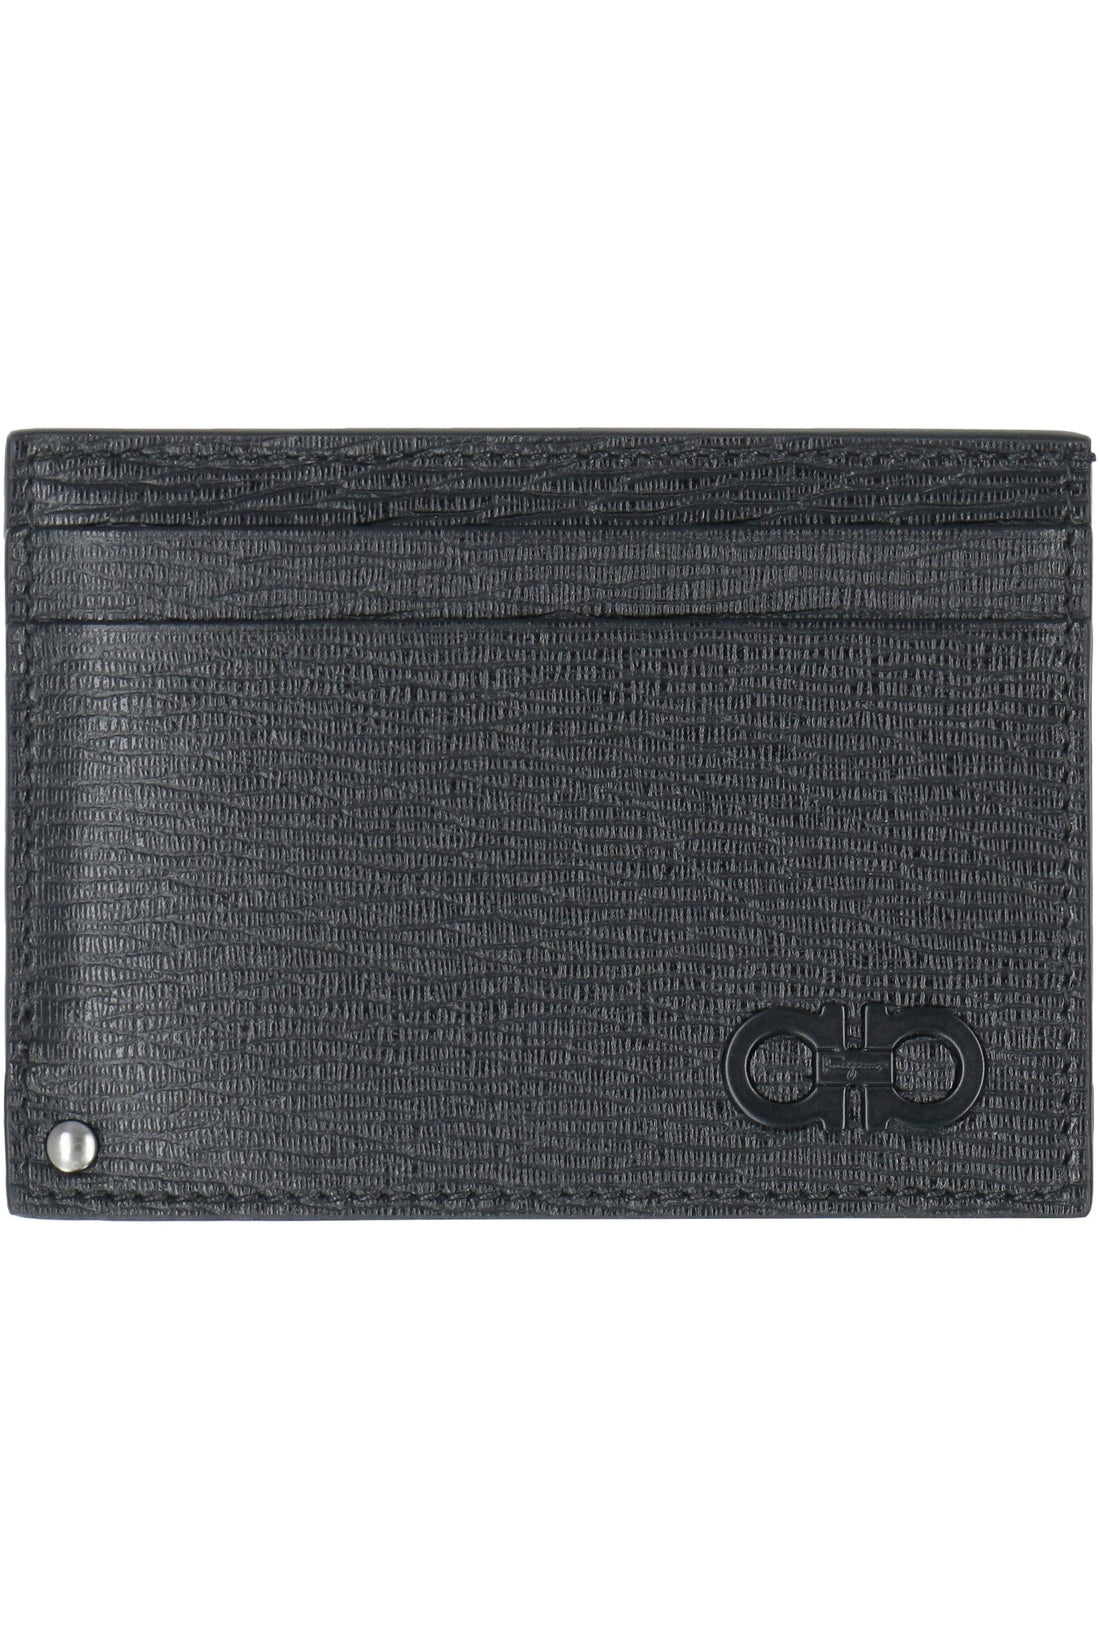 FERRAGAMO-OUTLET-SALE-Gancini leather card holder-ARCHIVIST